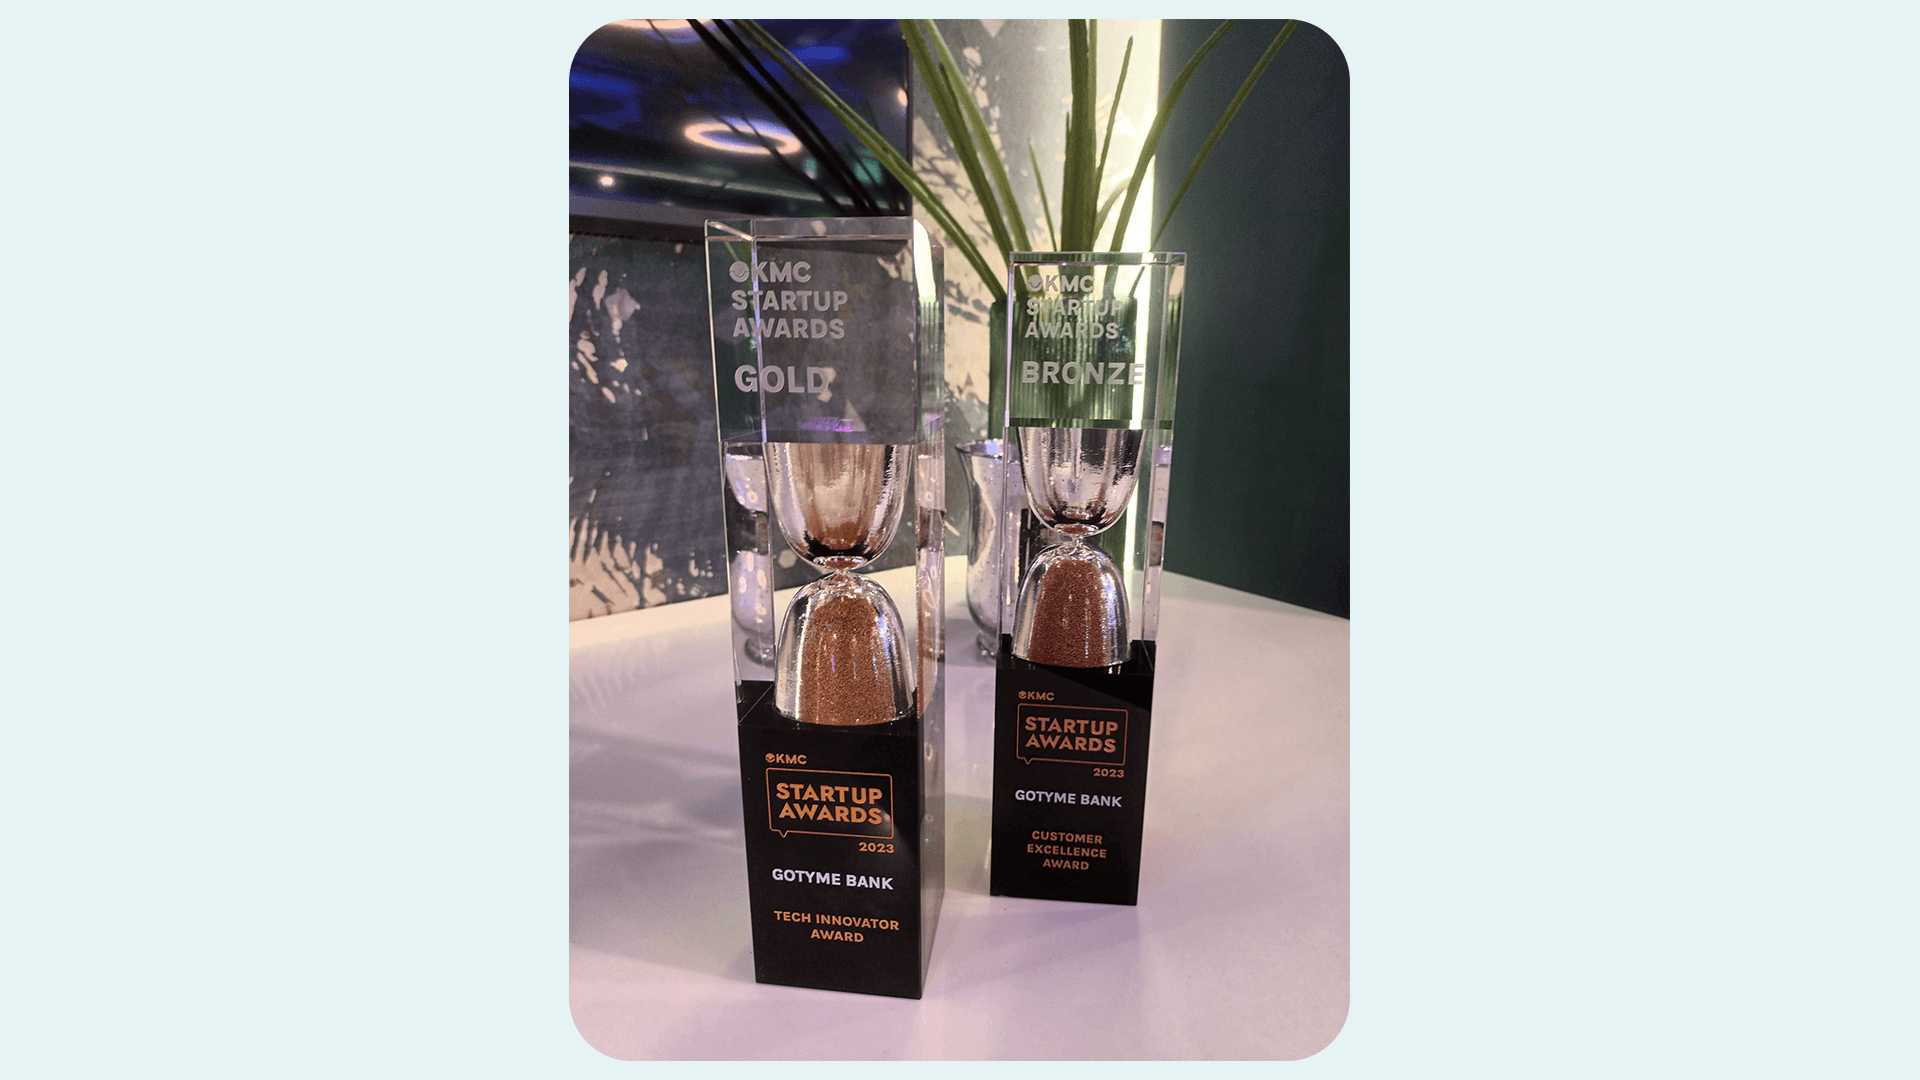 GoTyme Bank wins KMC Startup Awards